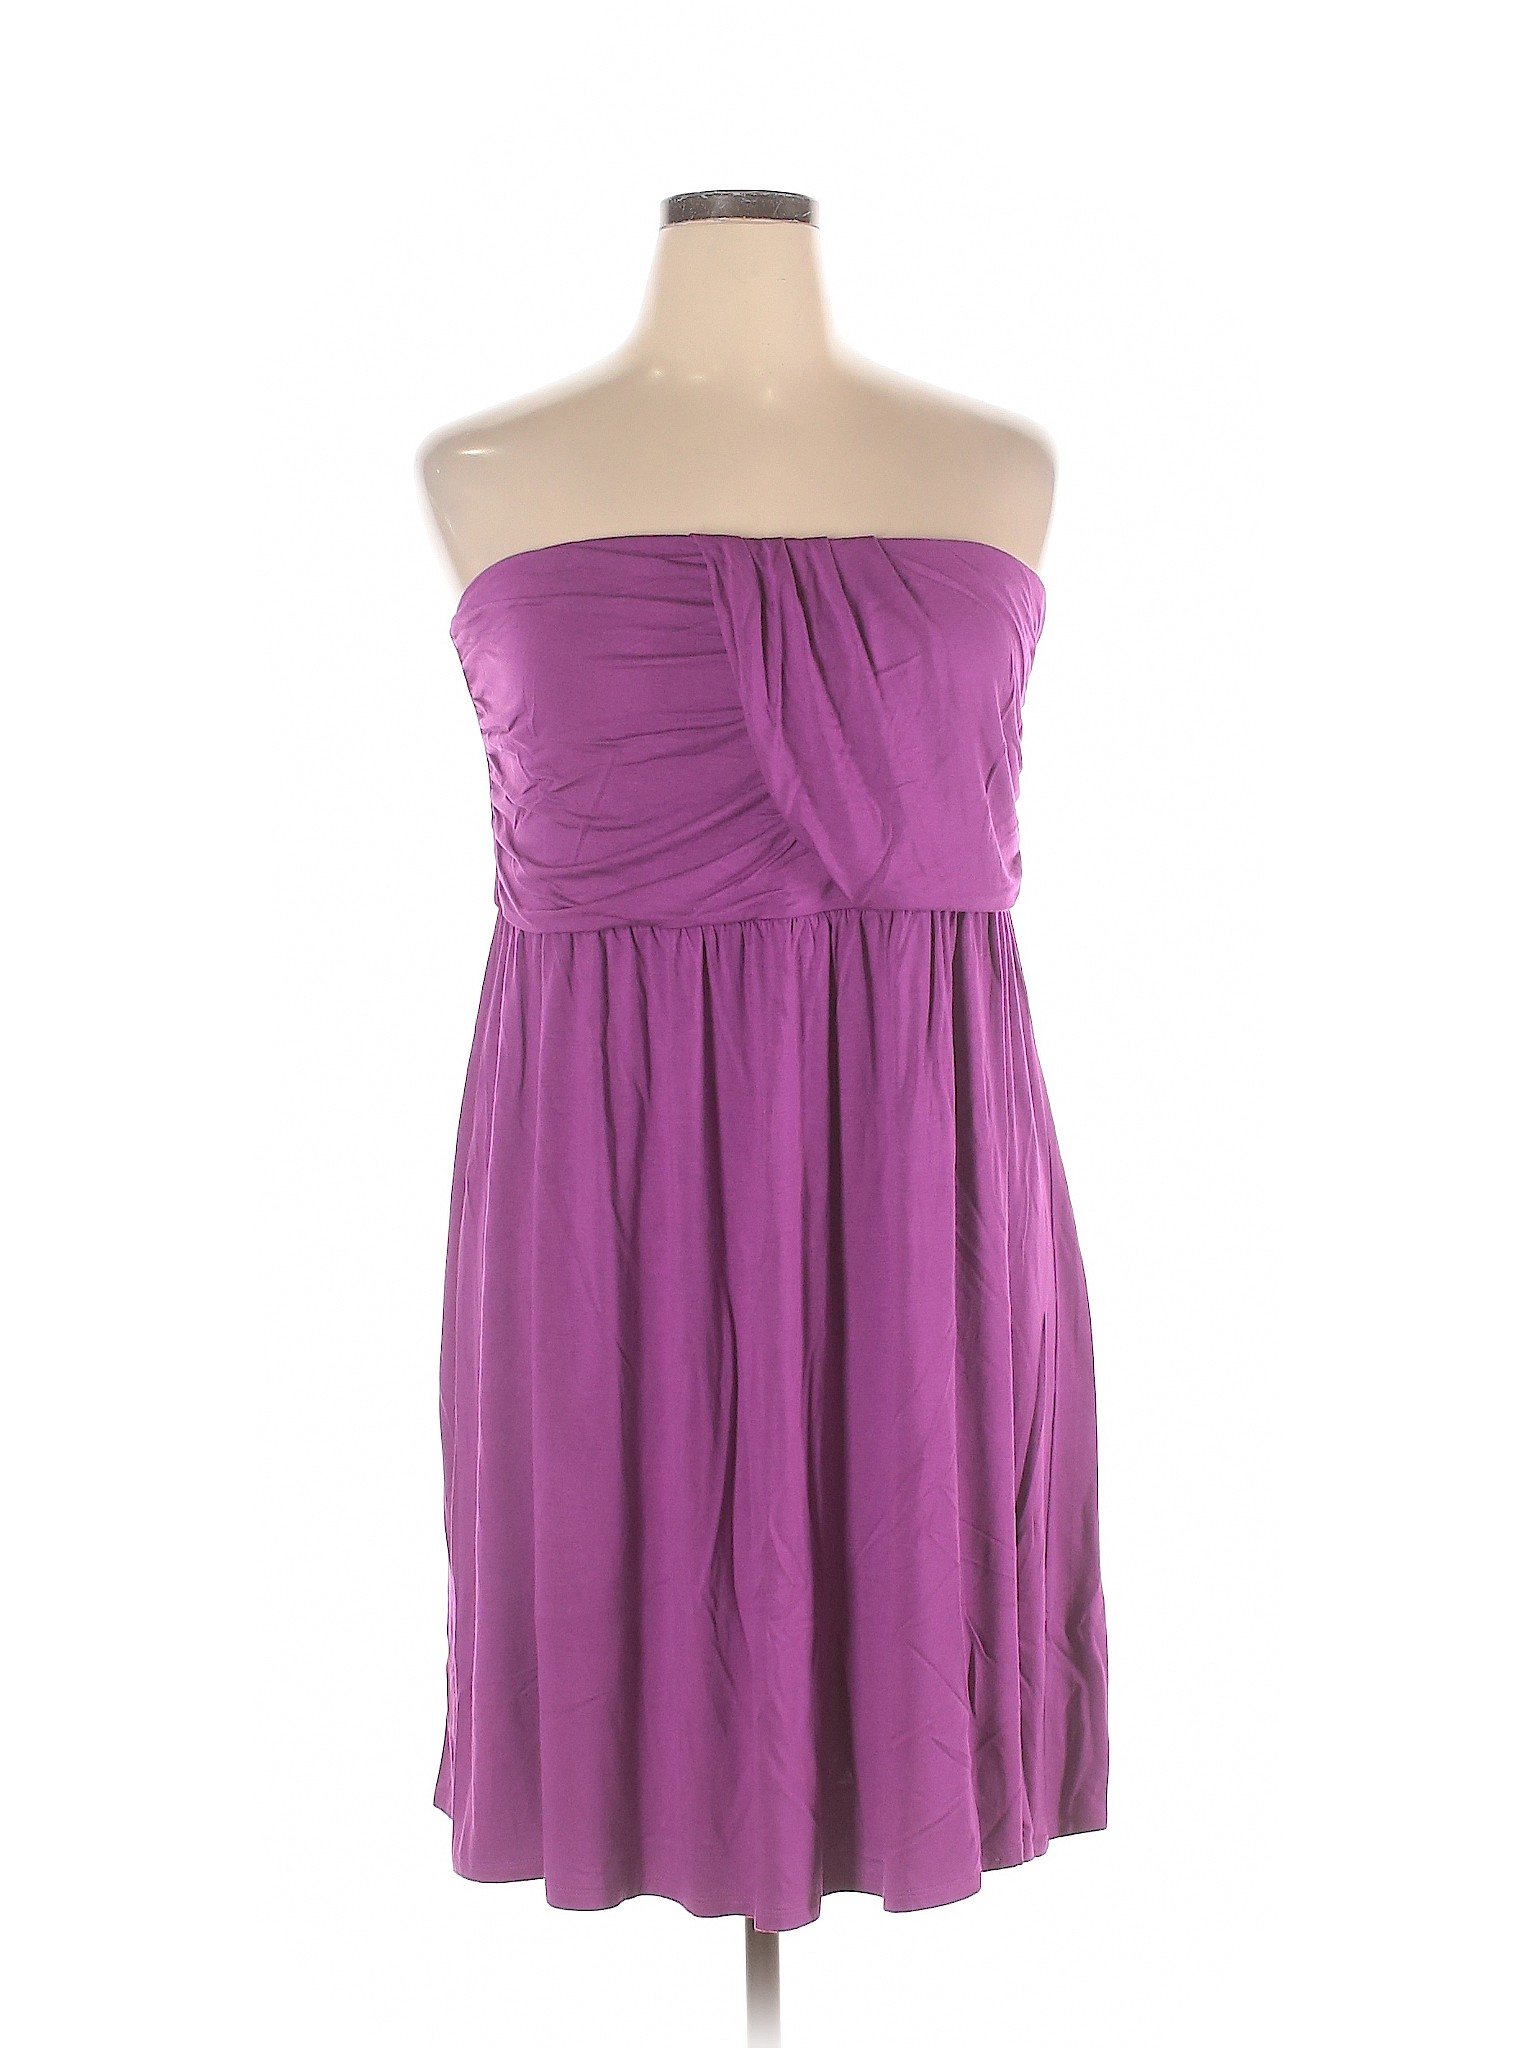 NWT Lane Bryant Women Purple Casual Dress 18 Plus | eBay